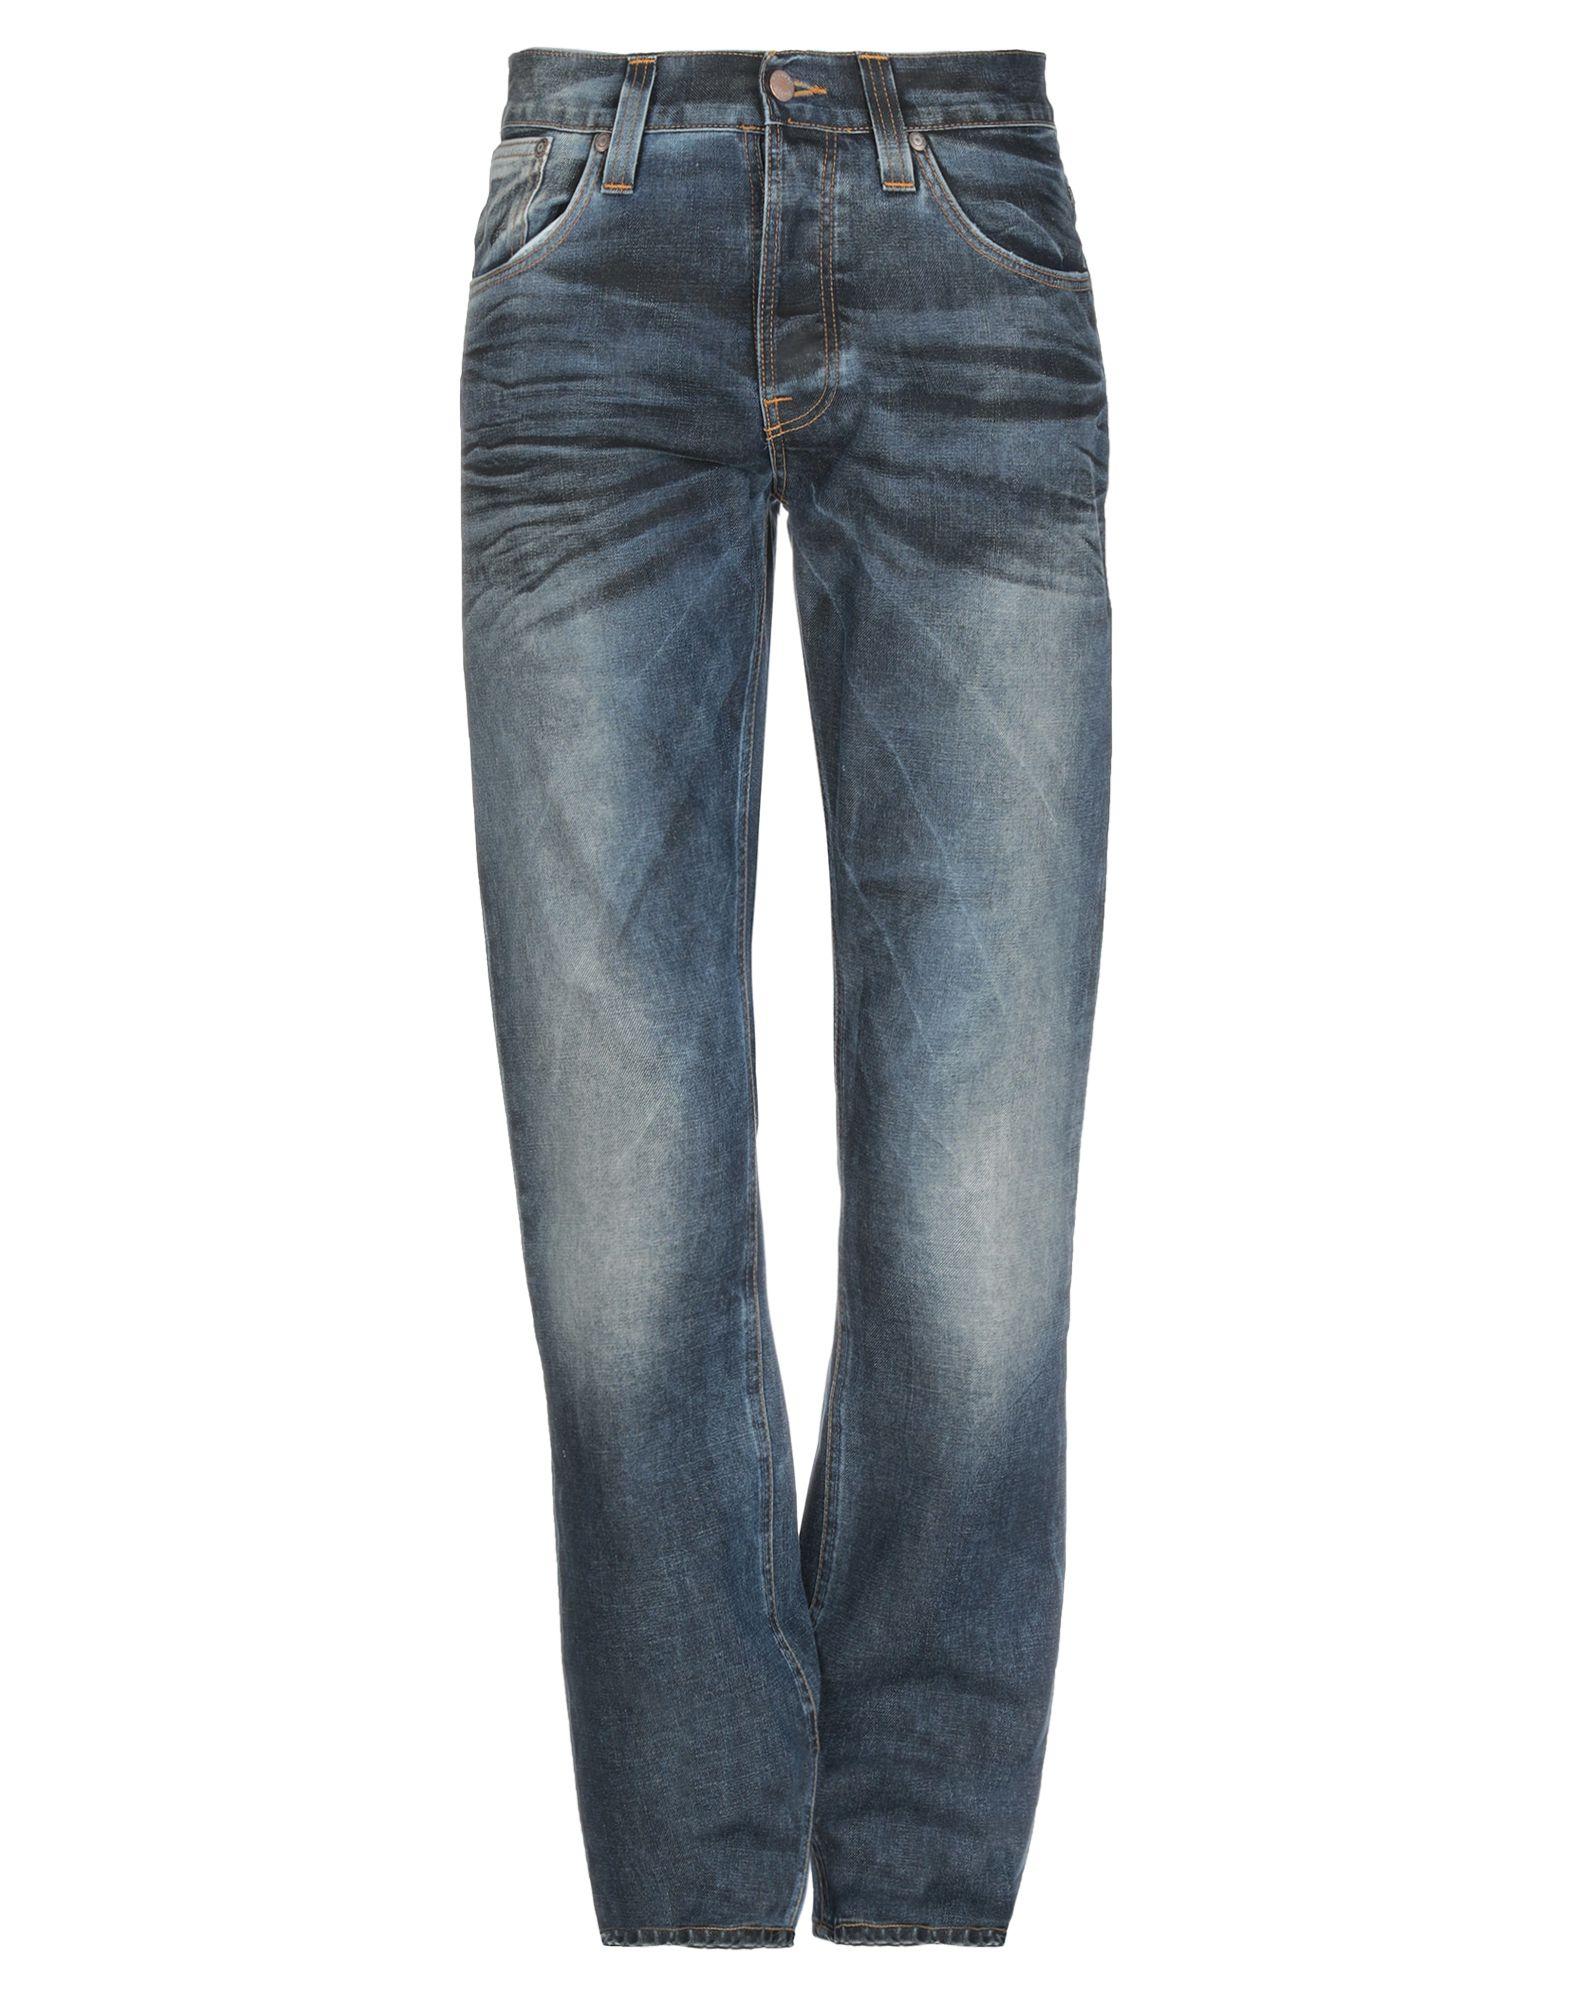 Nudie Jeans Denim Pants in Blue for Men - Save 31% - Lyst